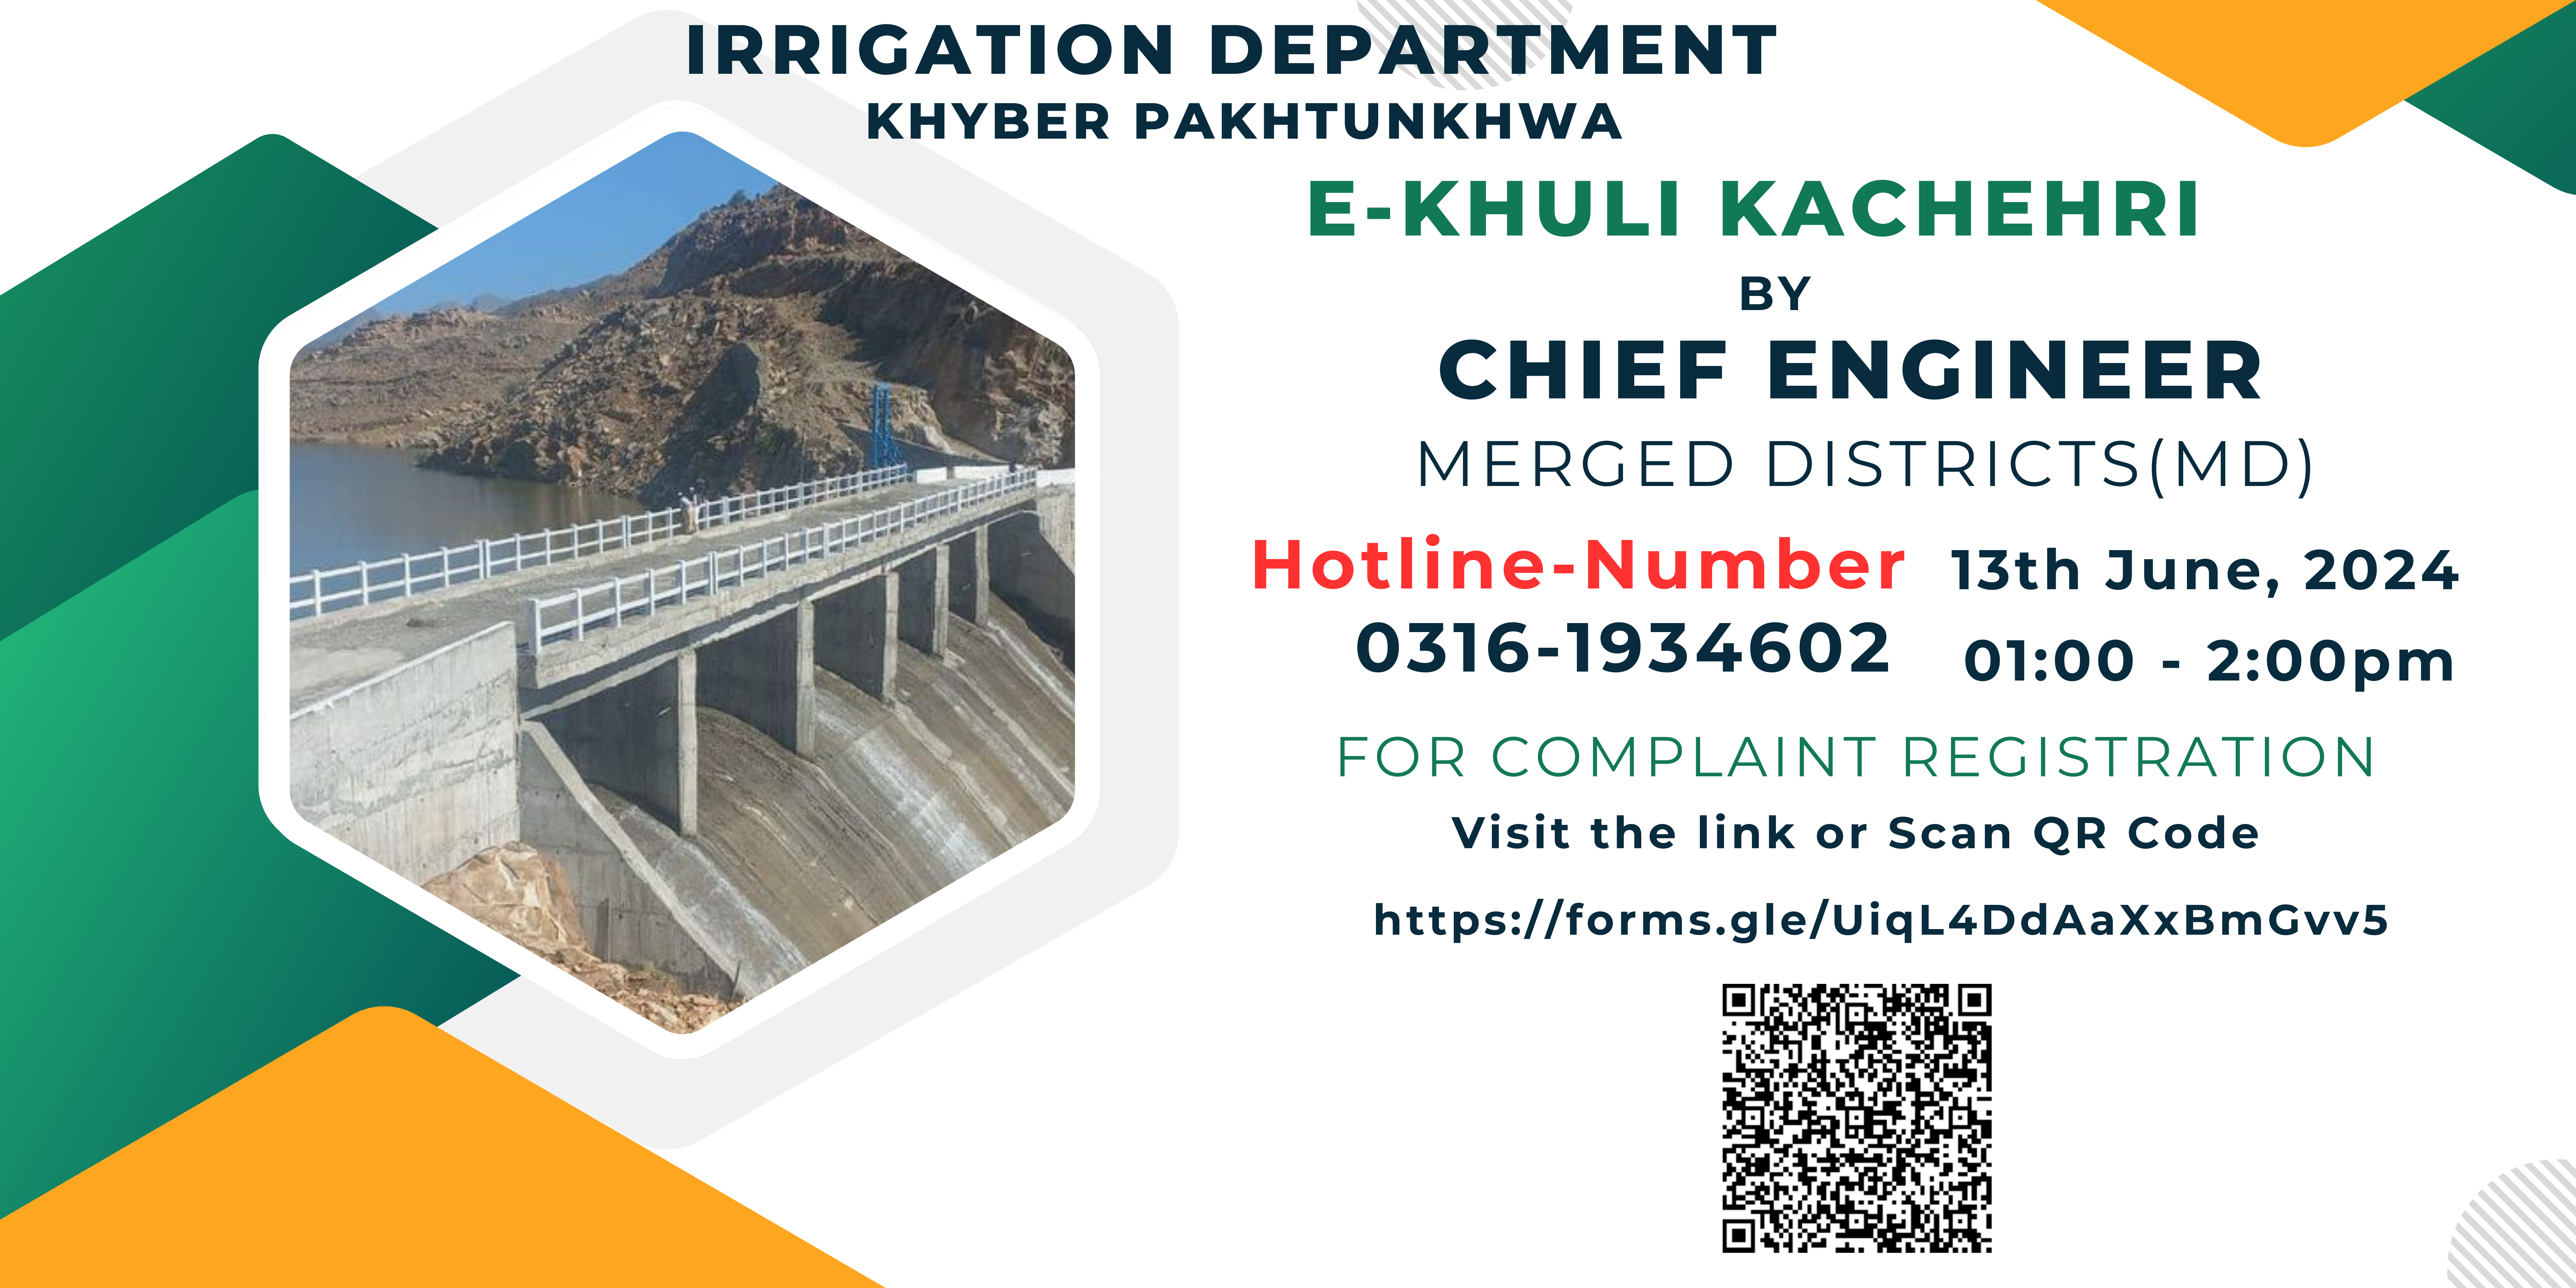 E-khuli kachehri Chief Engineer Merged Districts(Md)